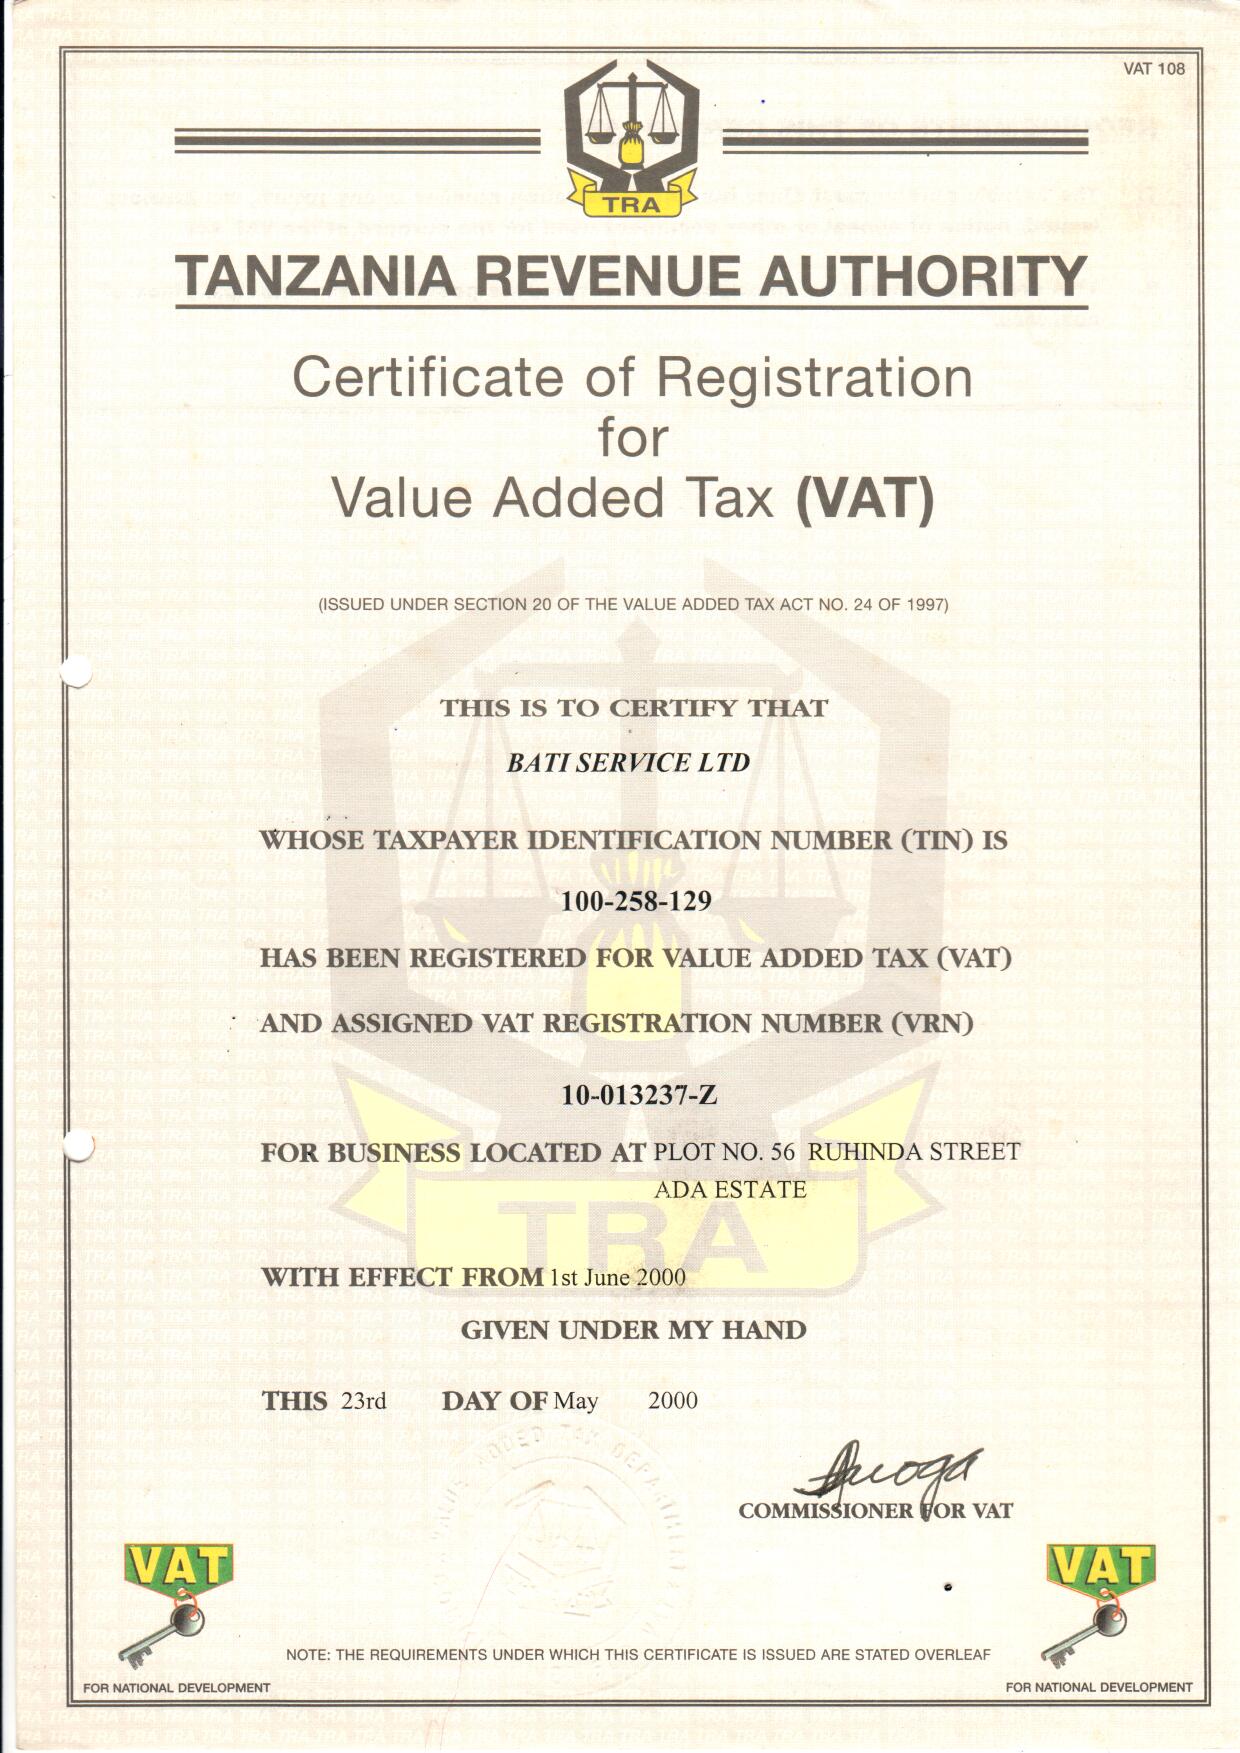 Certificate of Registration for VAT